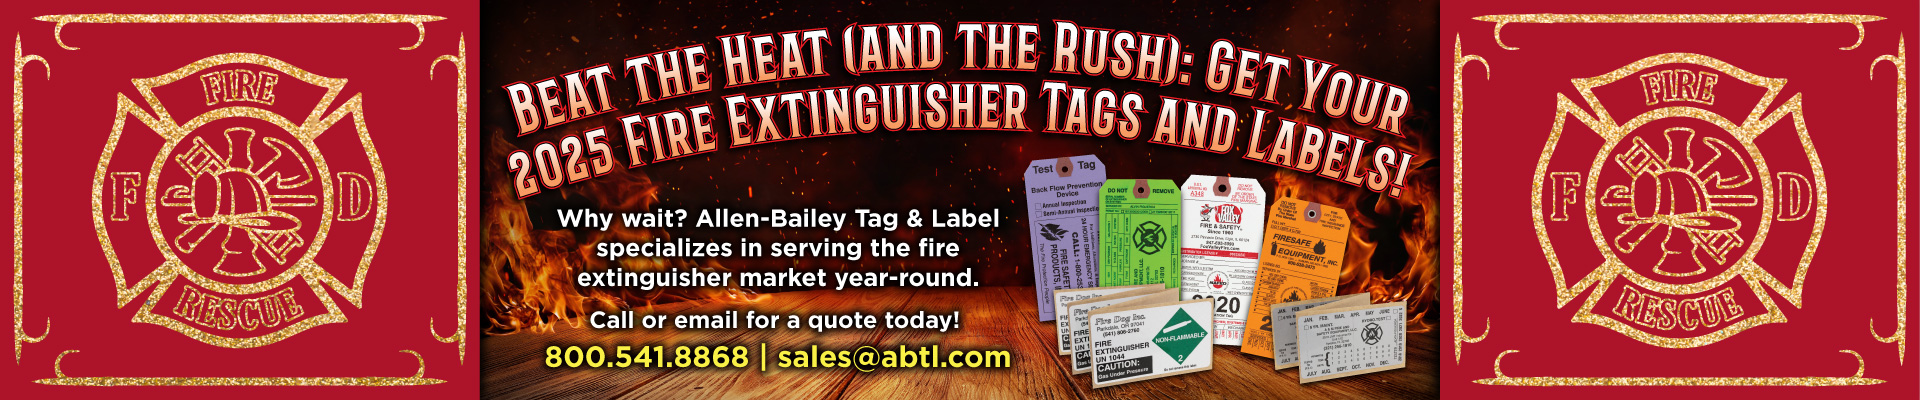 TH142-ABTL-JULY-Fire-Extinguisher-Tags-Slider